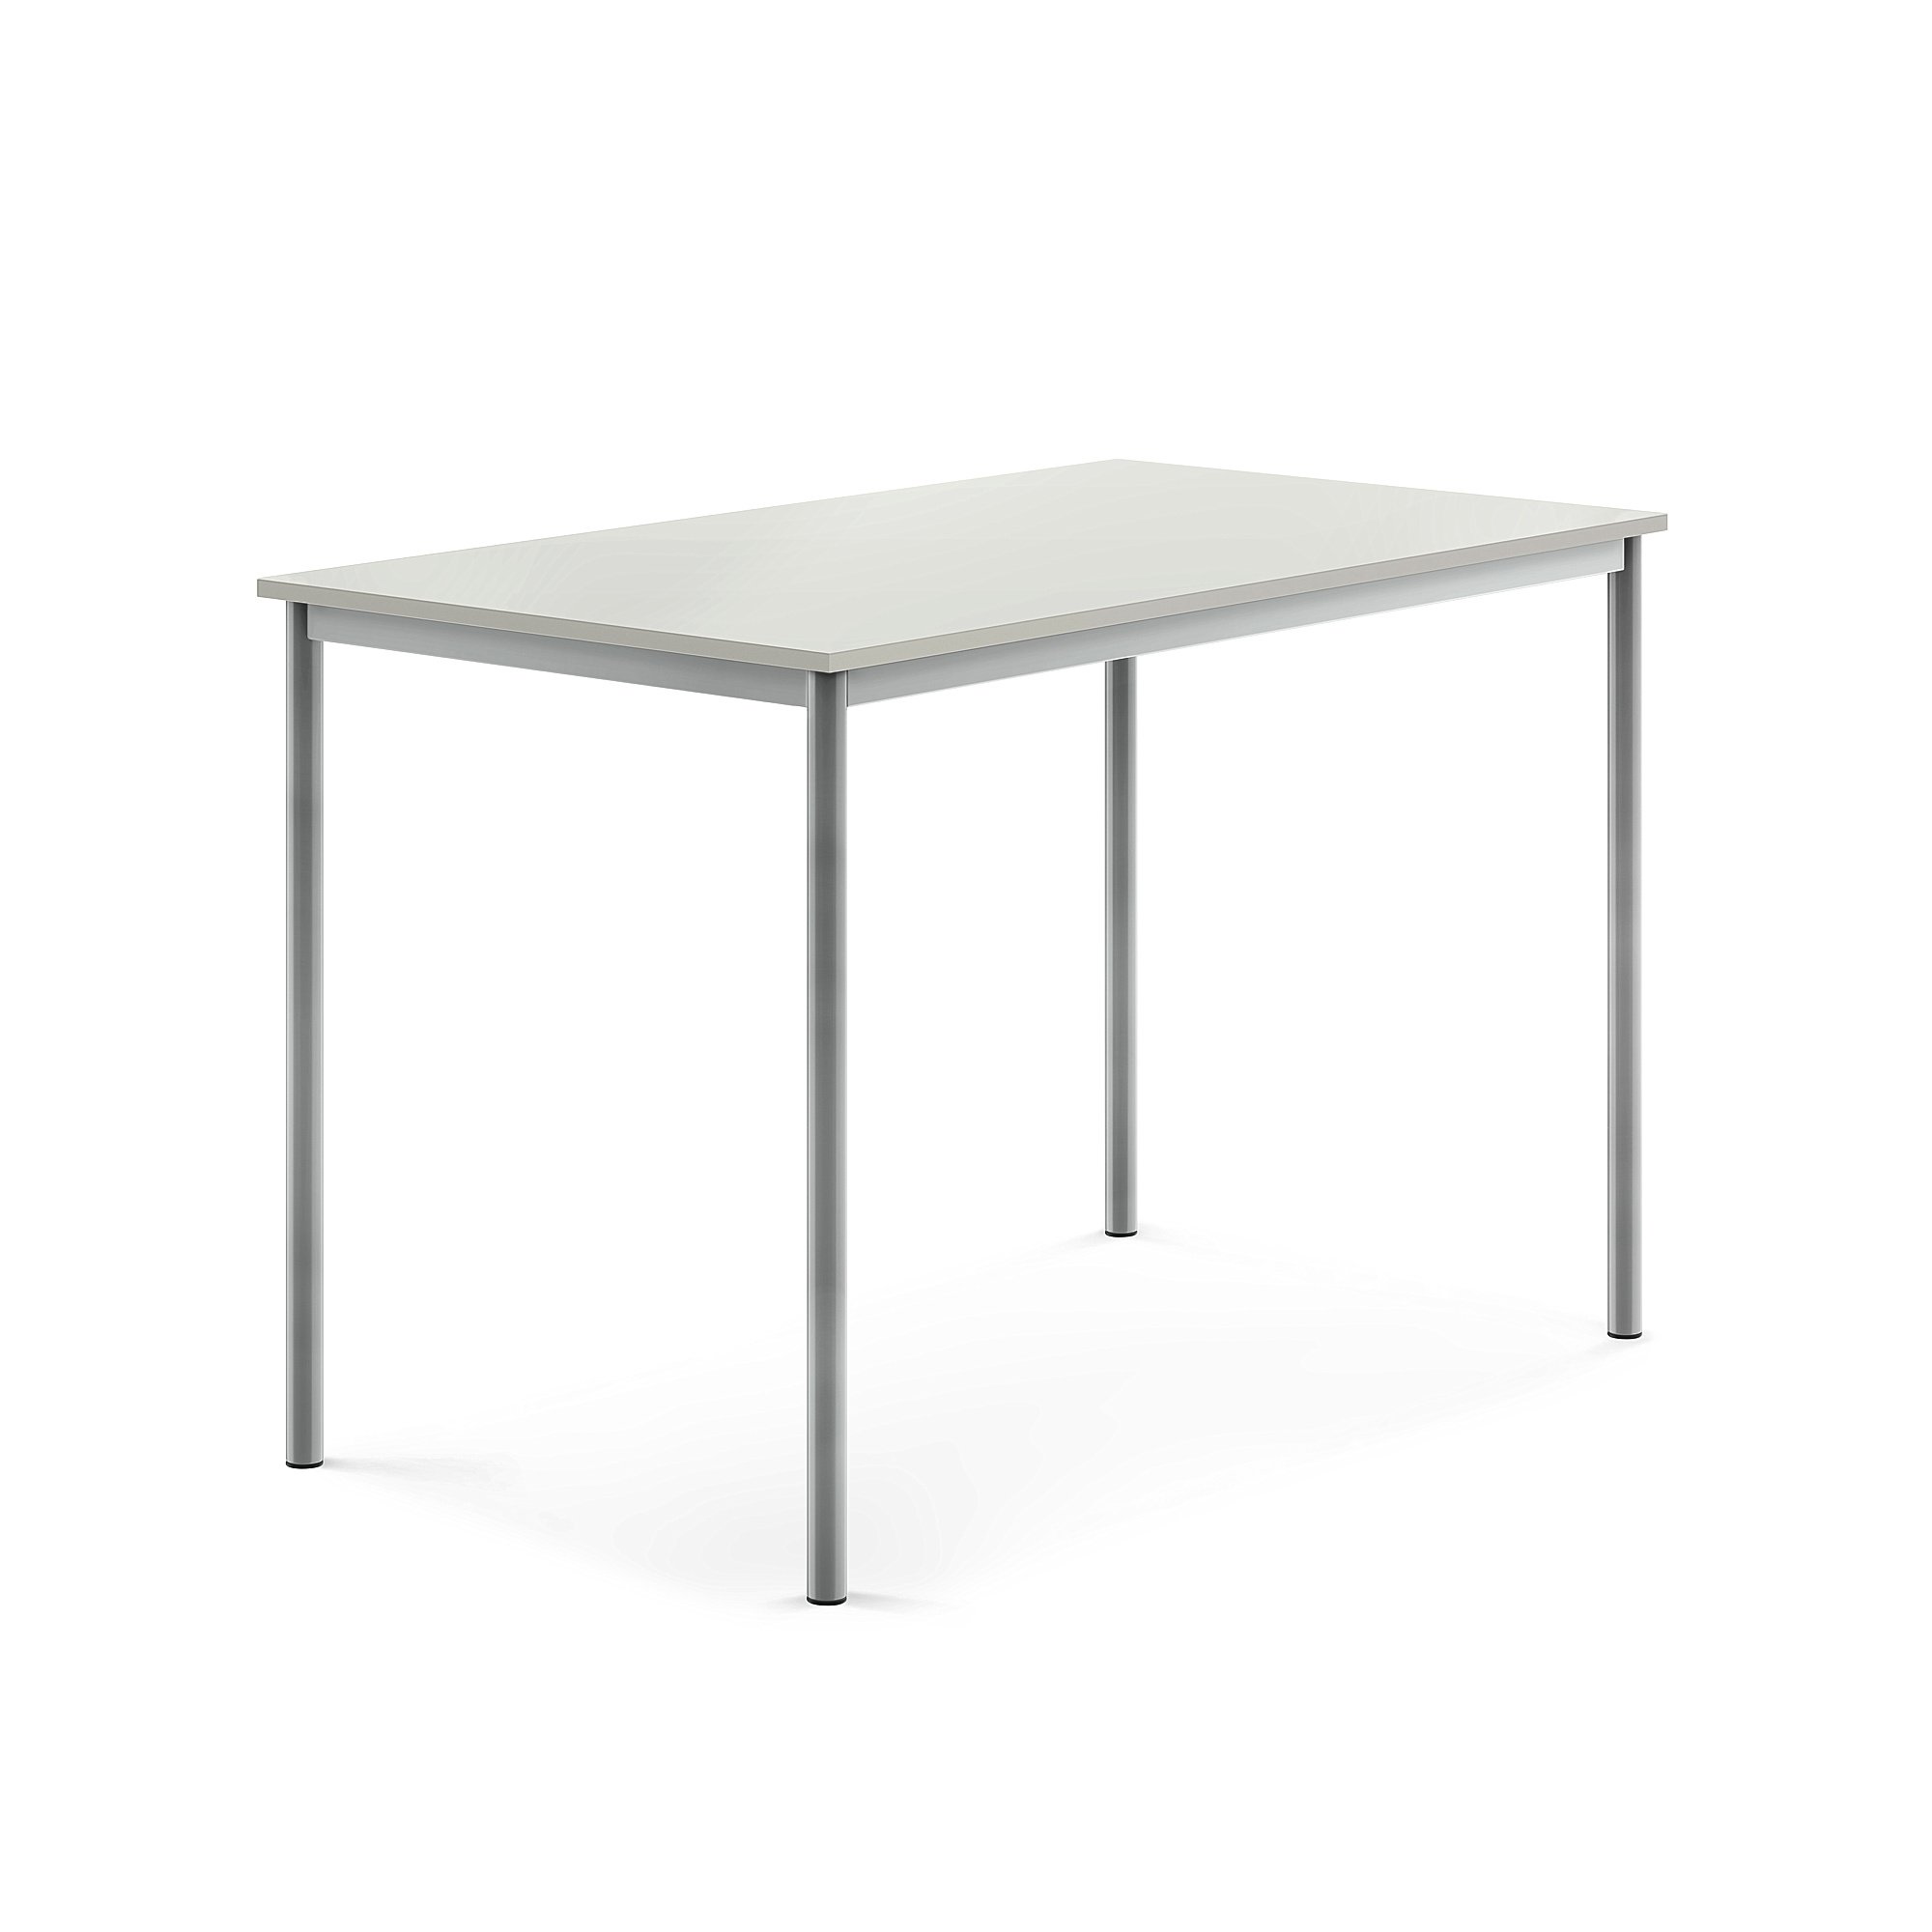 Stůl SONITUS, 1400x800x900 mm, stříbrné nohy, HPL deska tlumící hluk, šedá